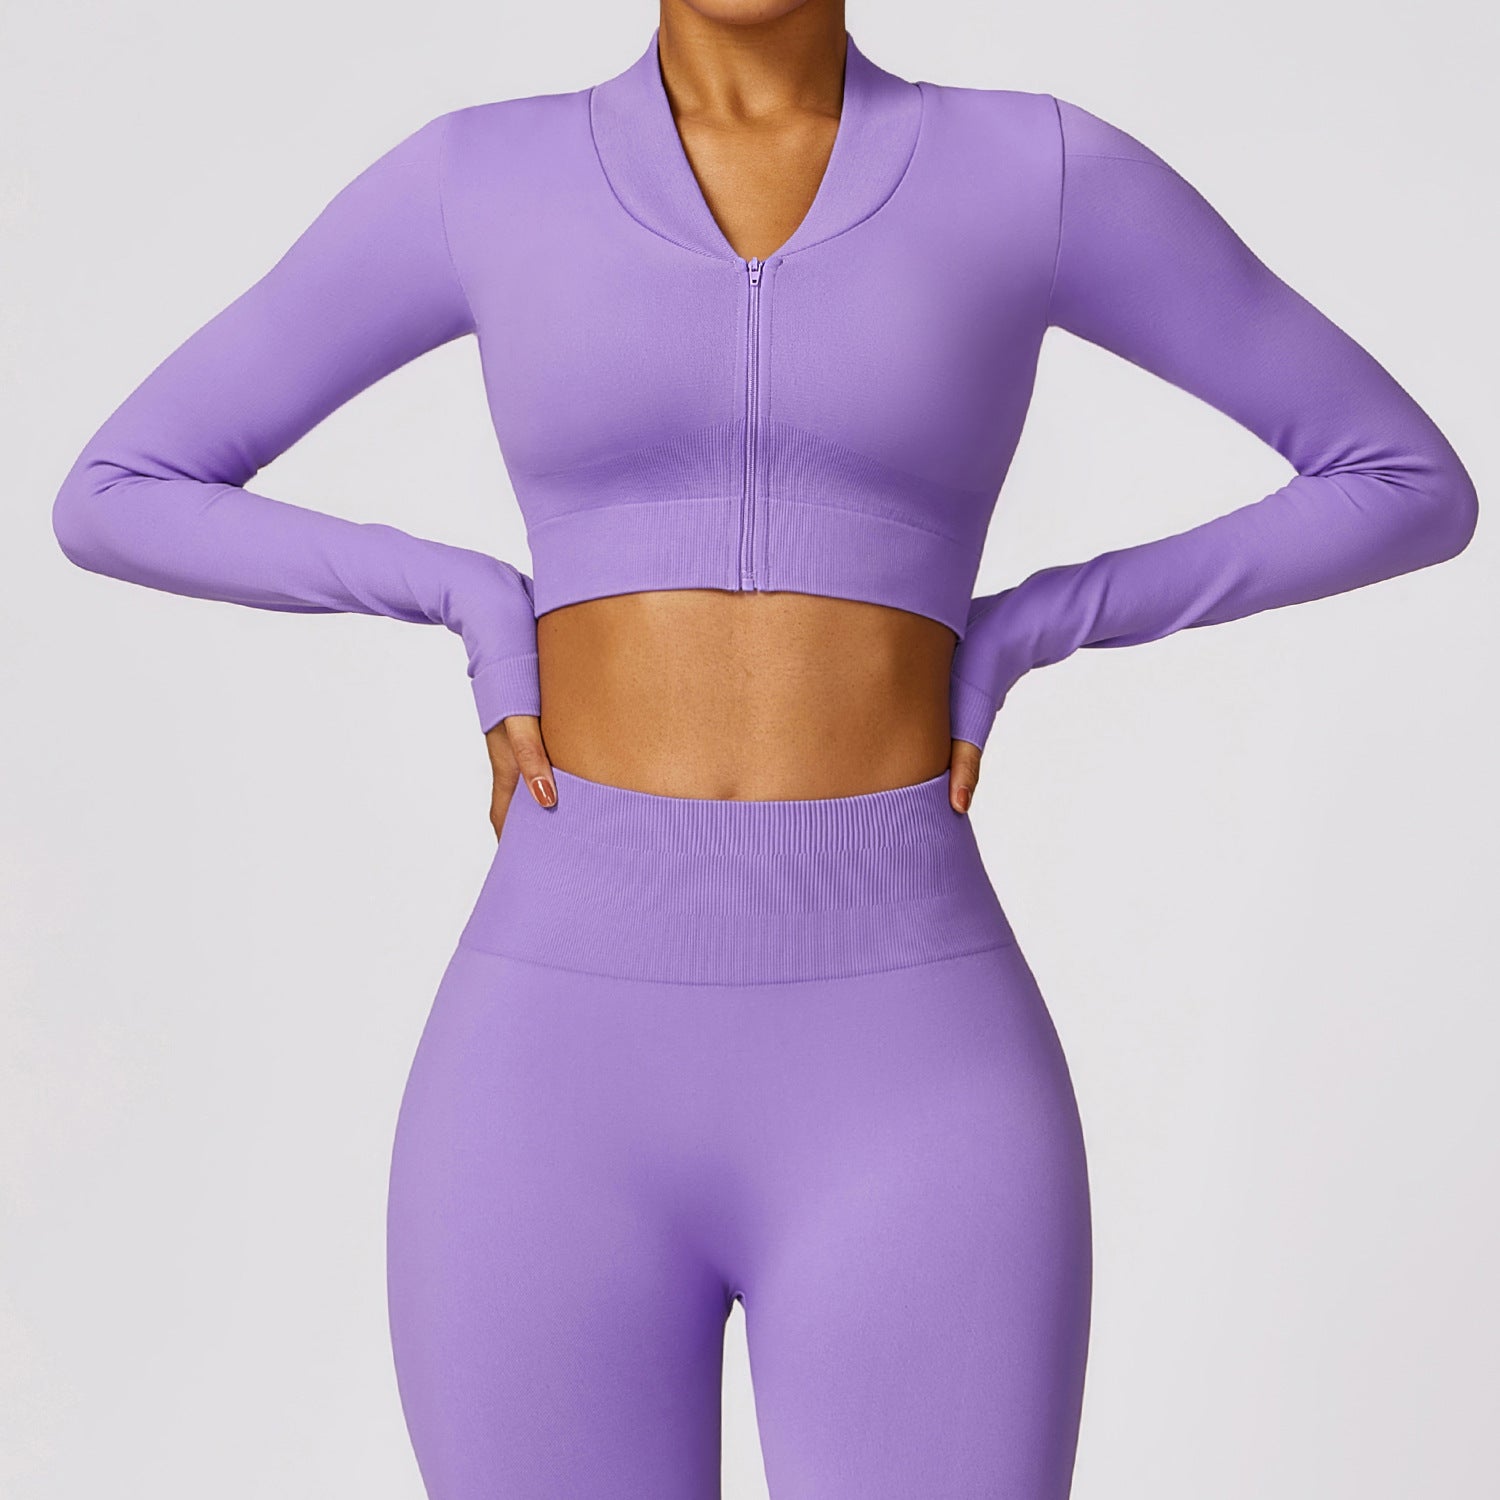 CAMI Purple Leggings - TIYE the coolest sportswear & gym apparel